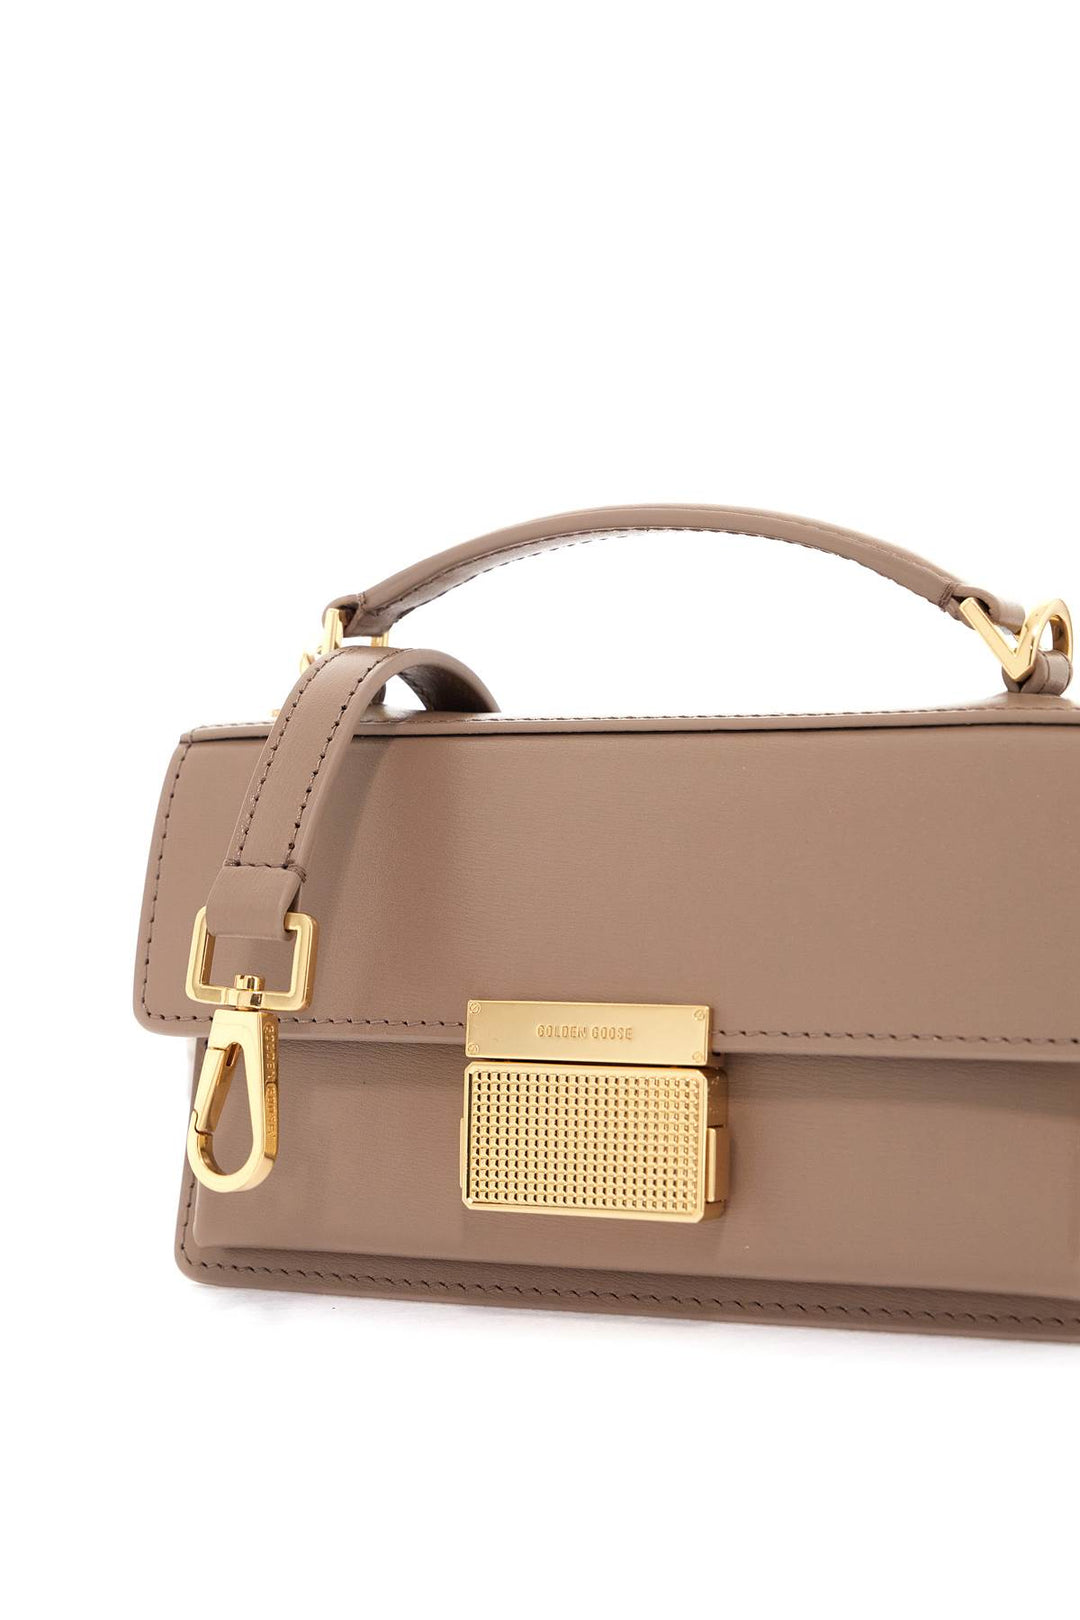 Golden Goose Mini Venice Leather Palmellata Handbag   Beige